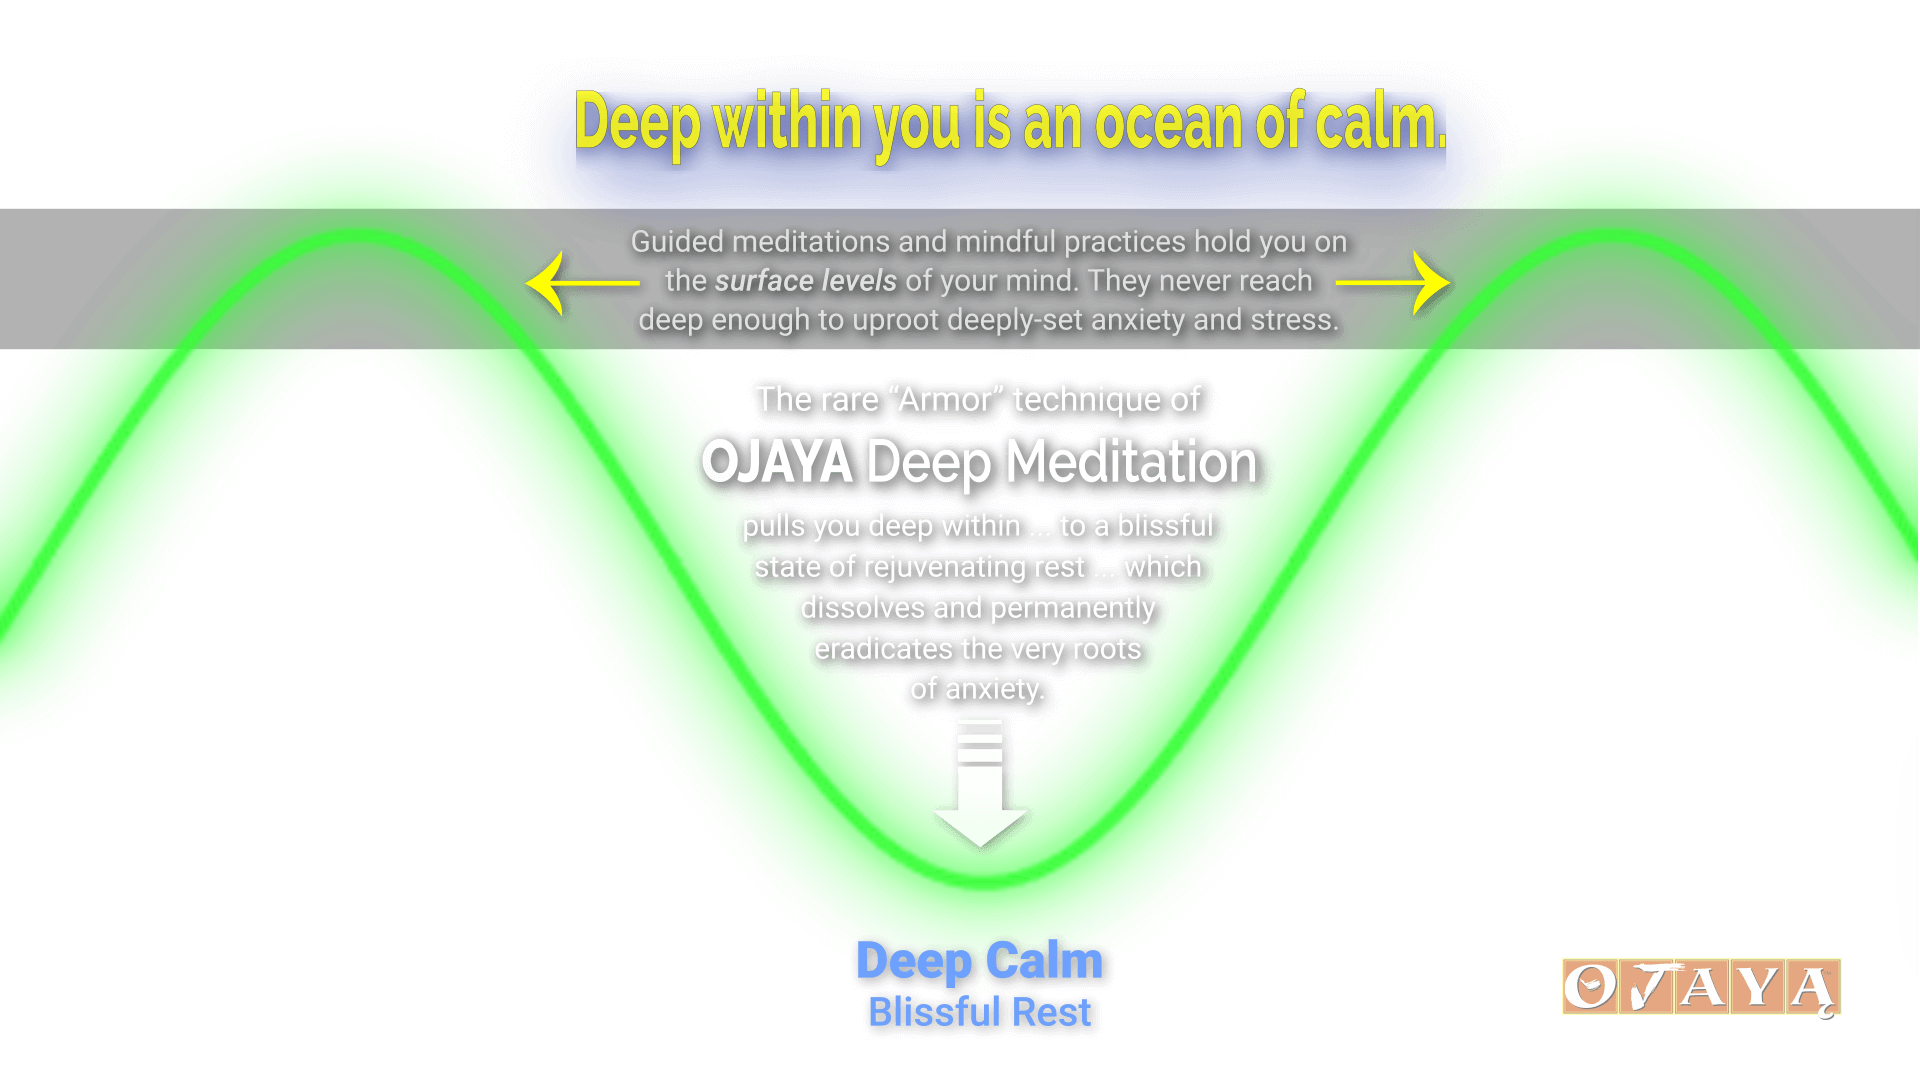 Ojaya Deep Meditation empowers you with serene energy.